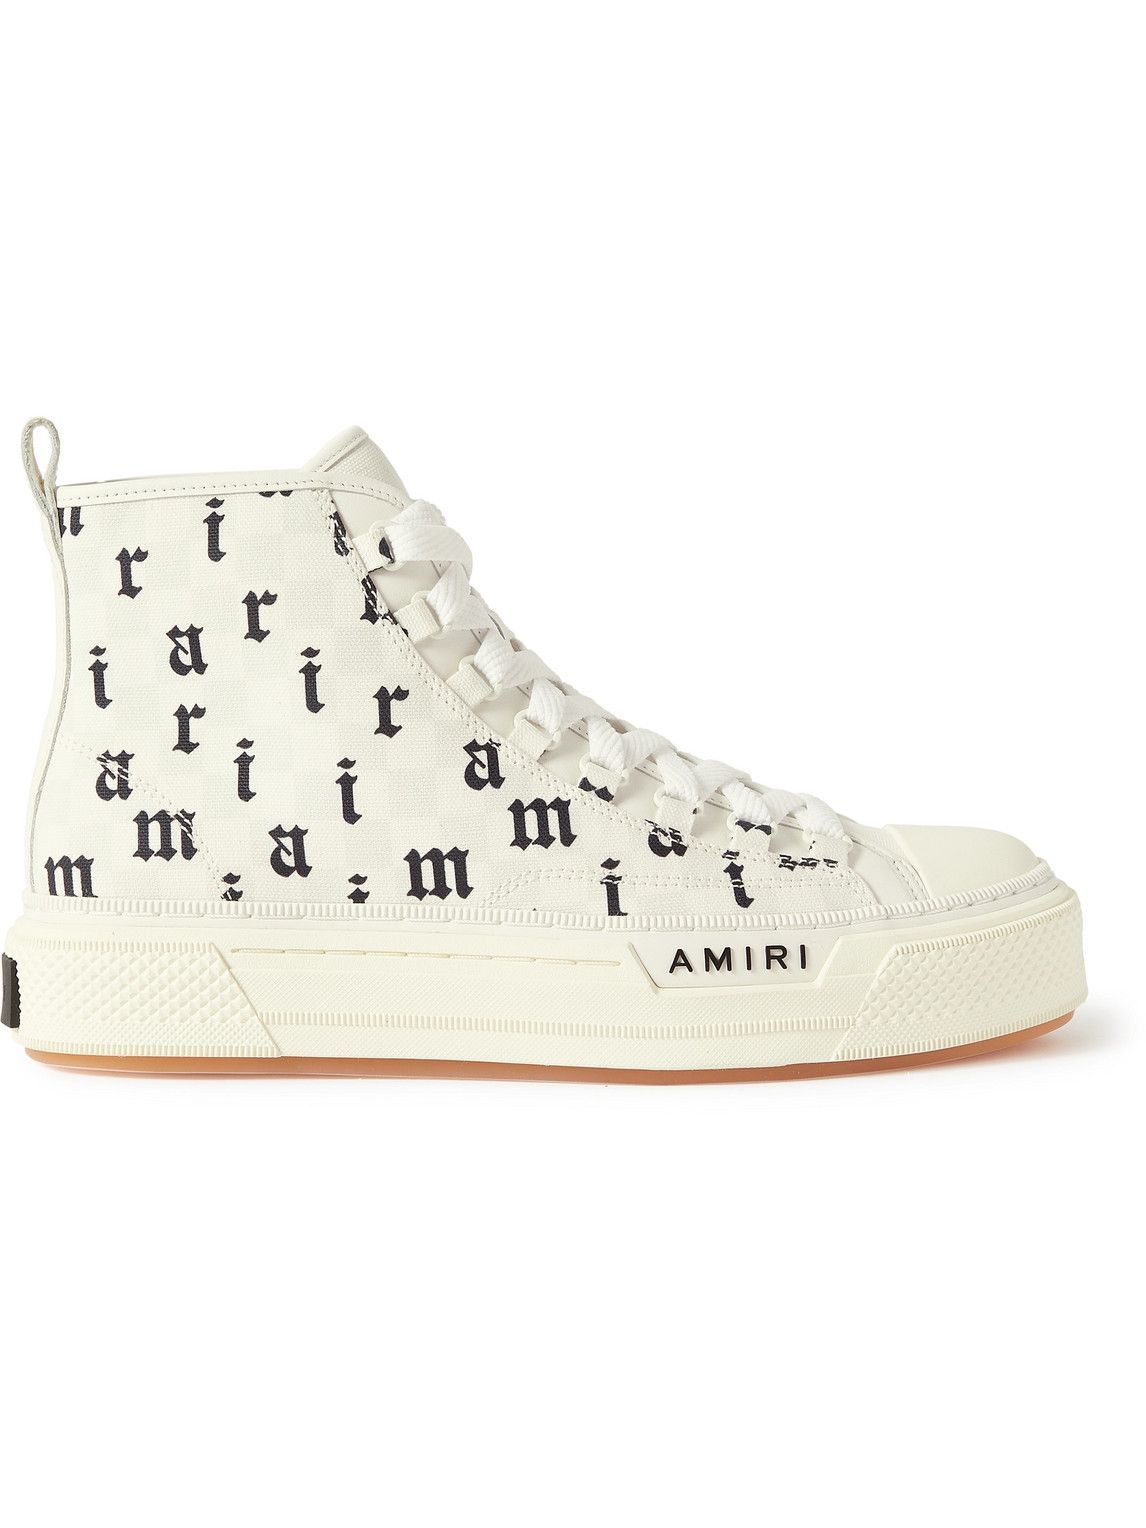 AMIRI - Logo-Print Canvas High-Top Sneakers - White Amiri